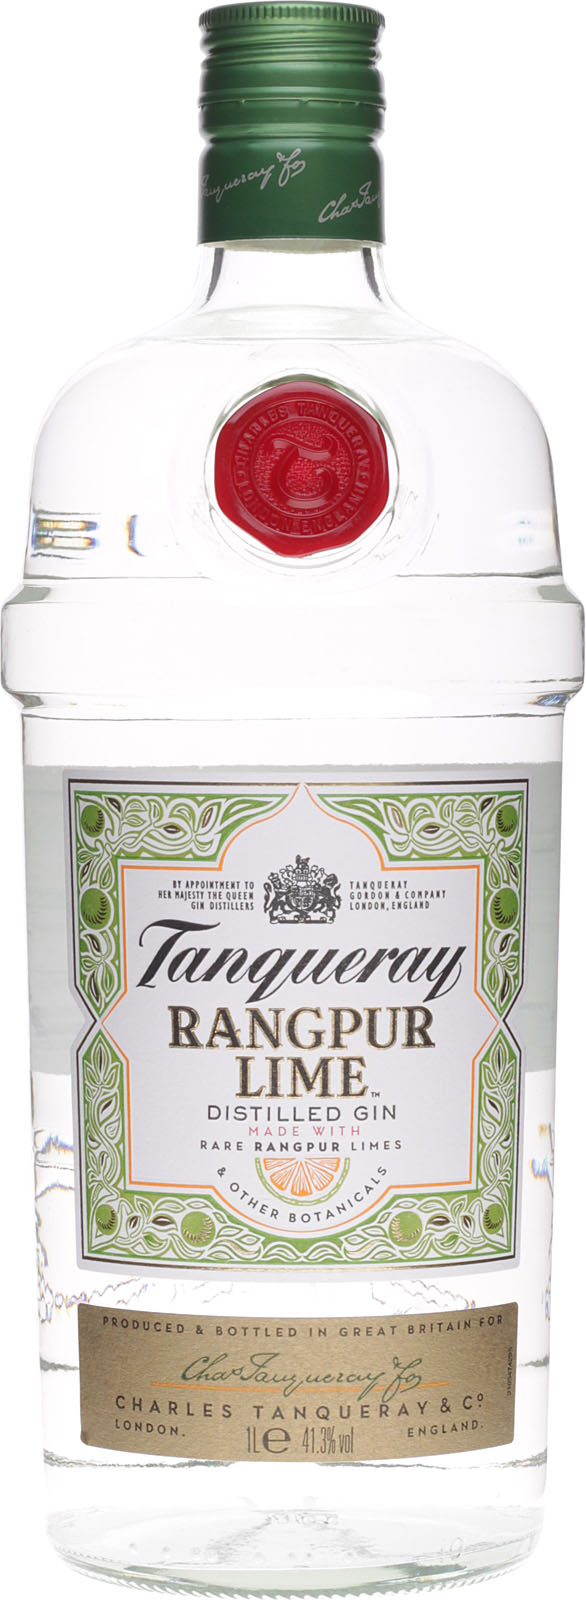 Tanqueray Rangpur Gin hier bei uns im Onlineshop